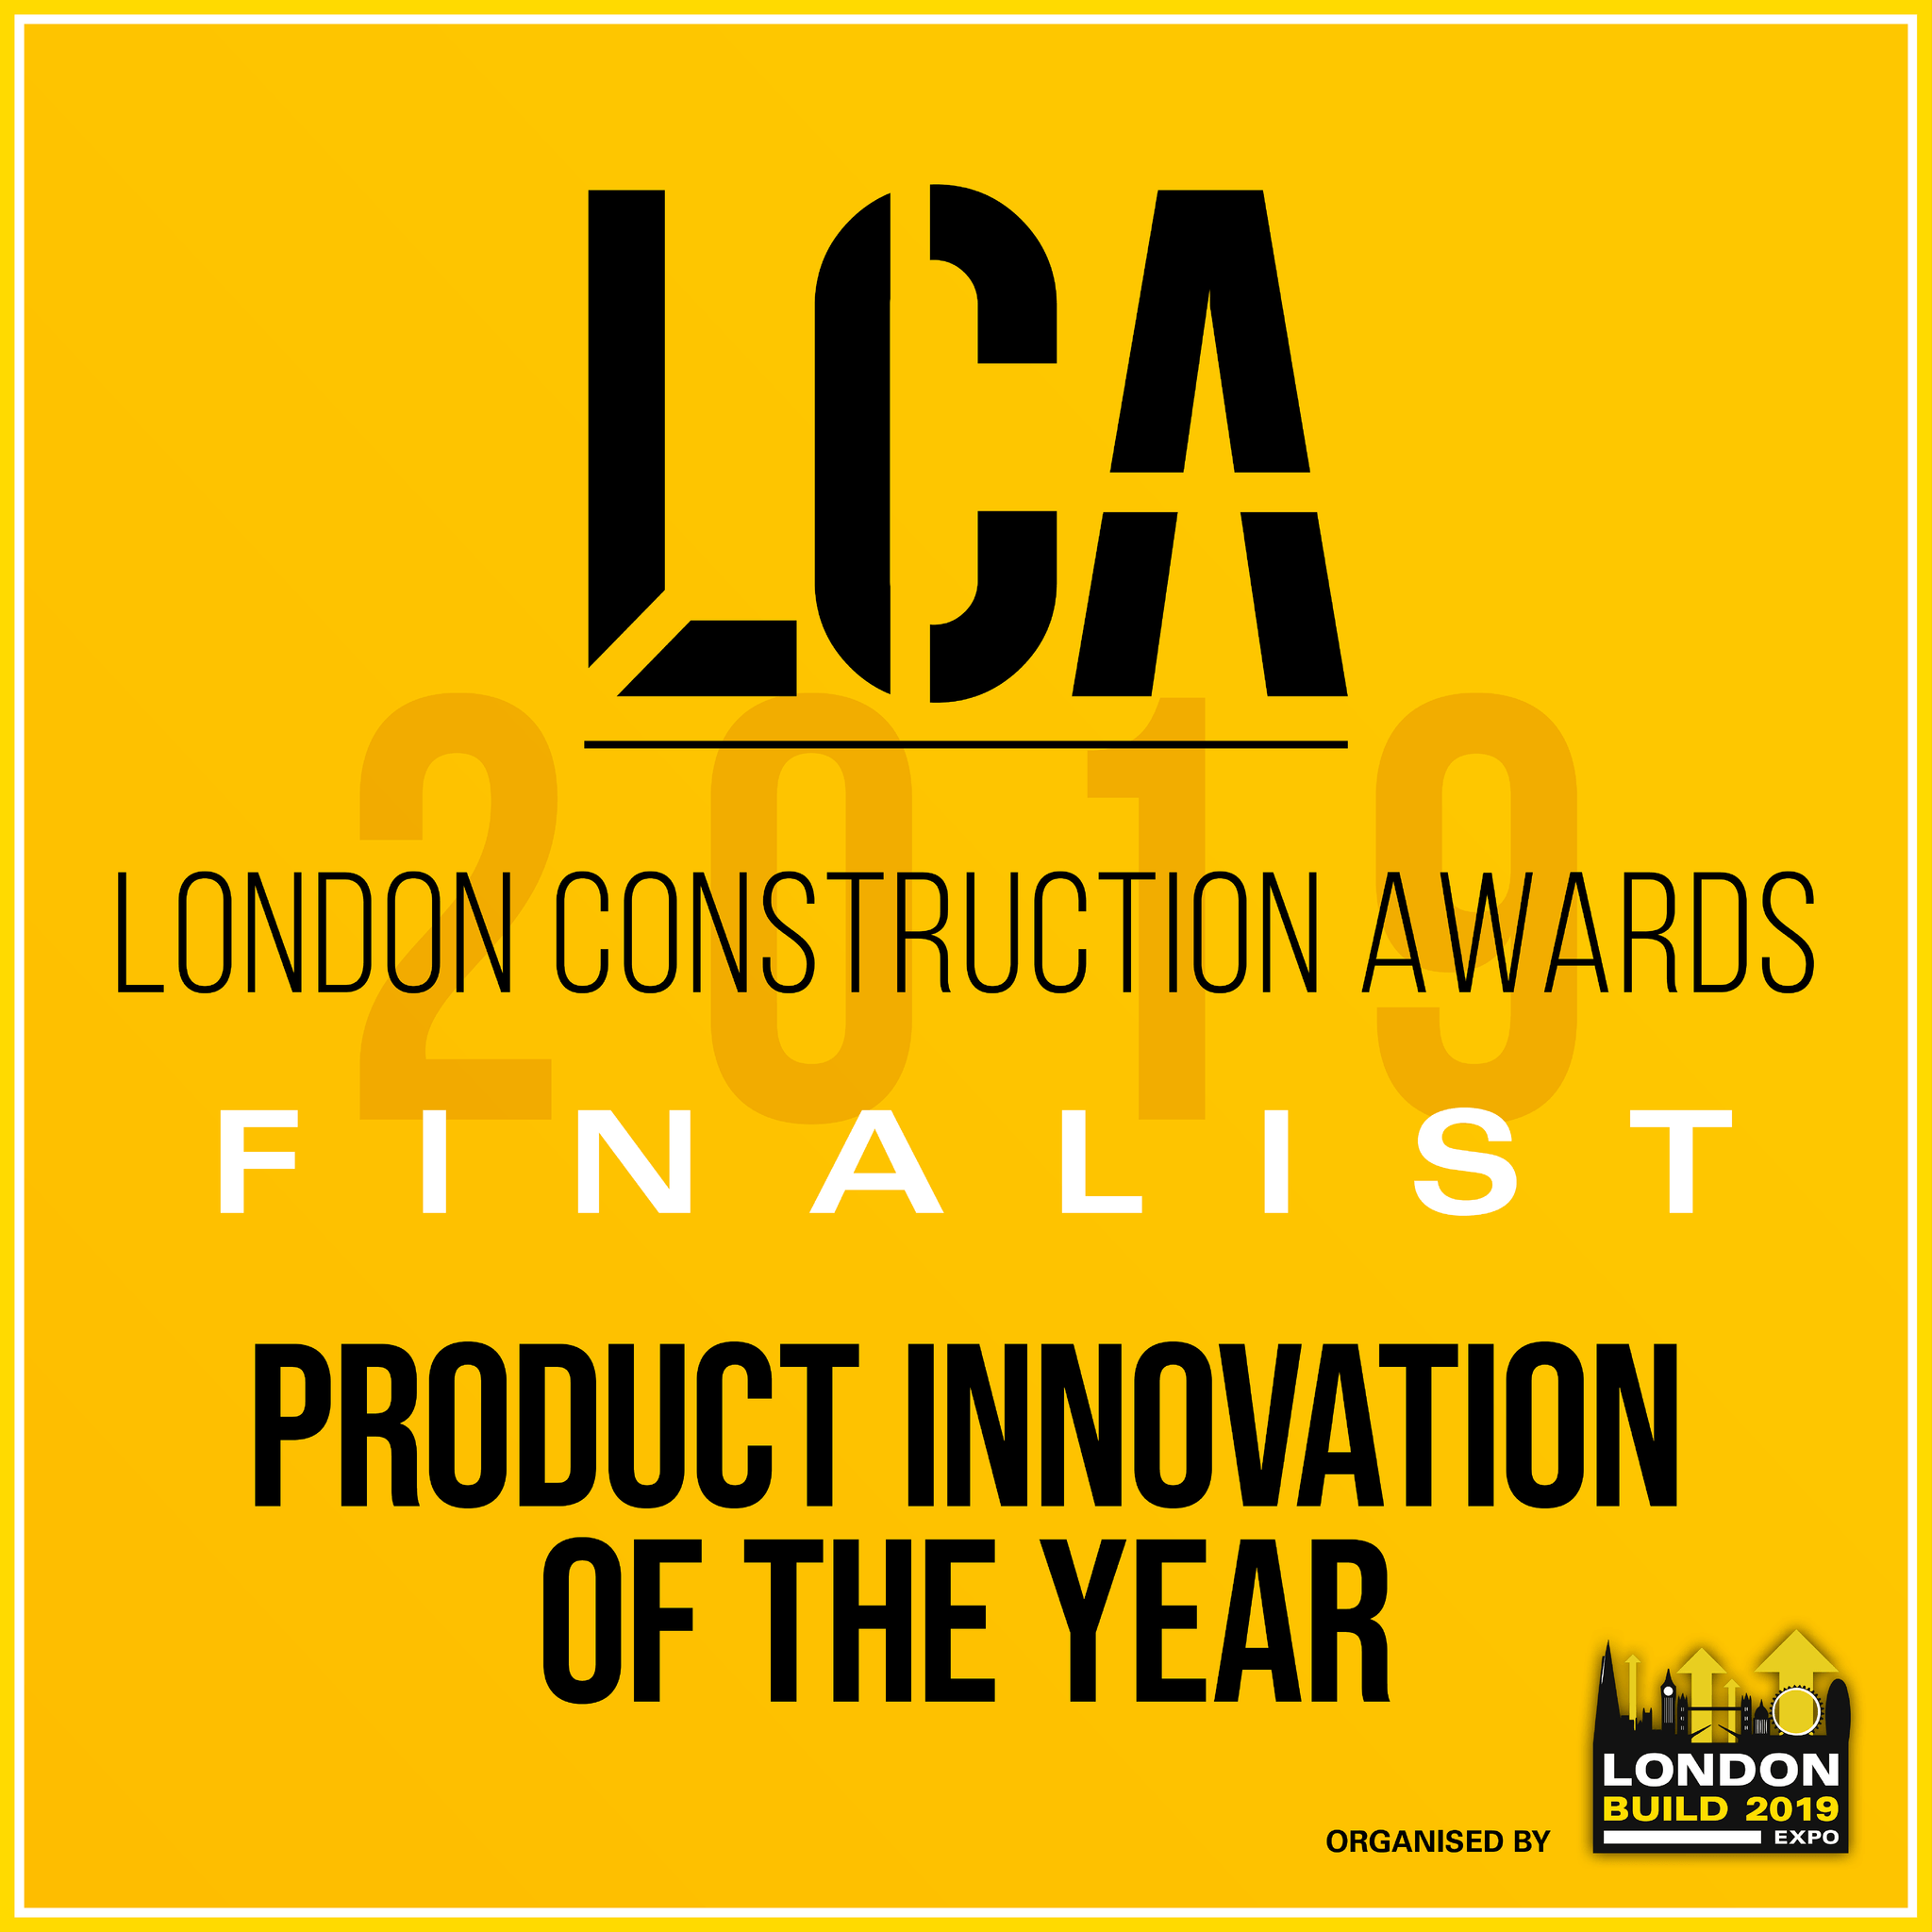 London Construction Awards 2019 Finalist!